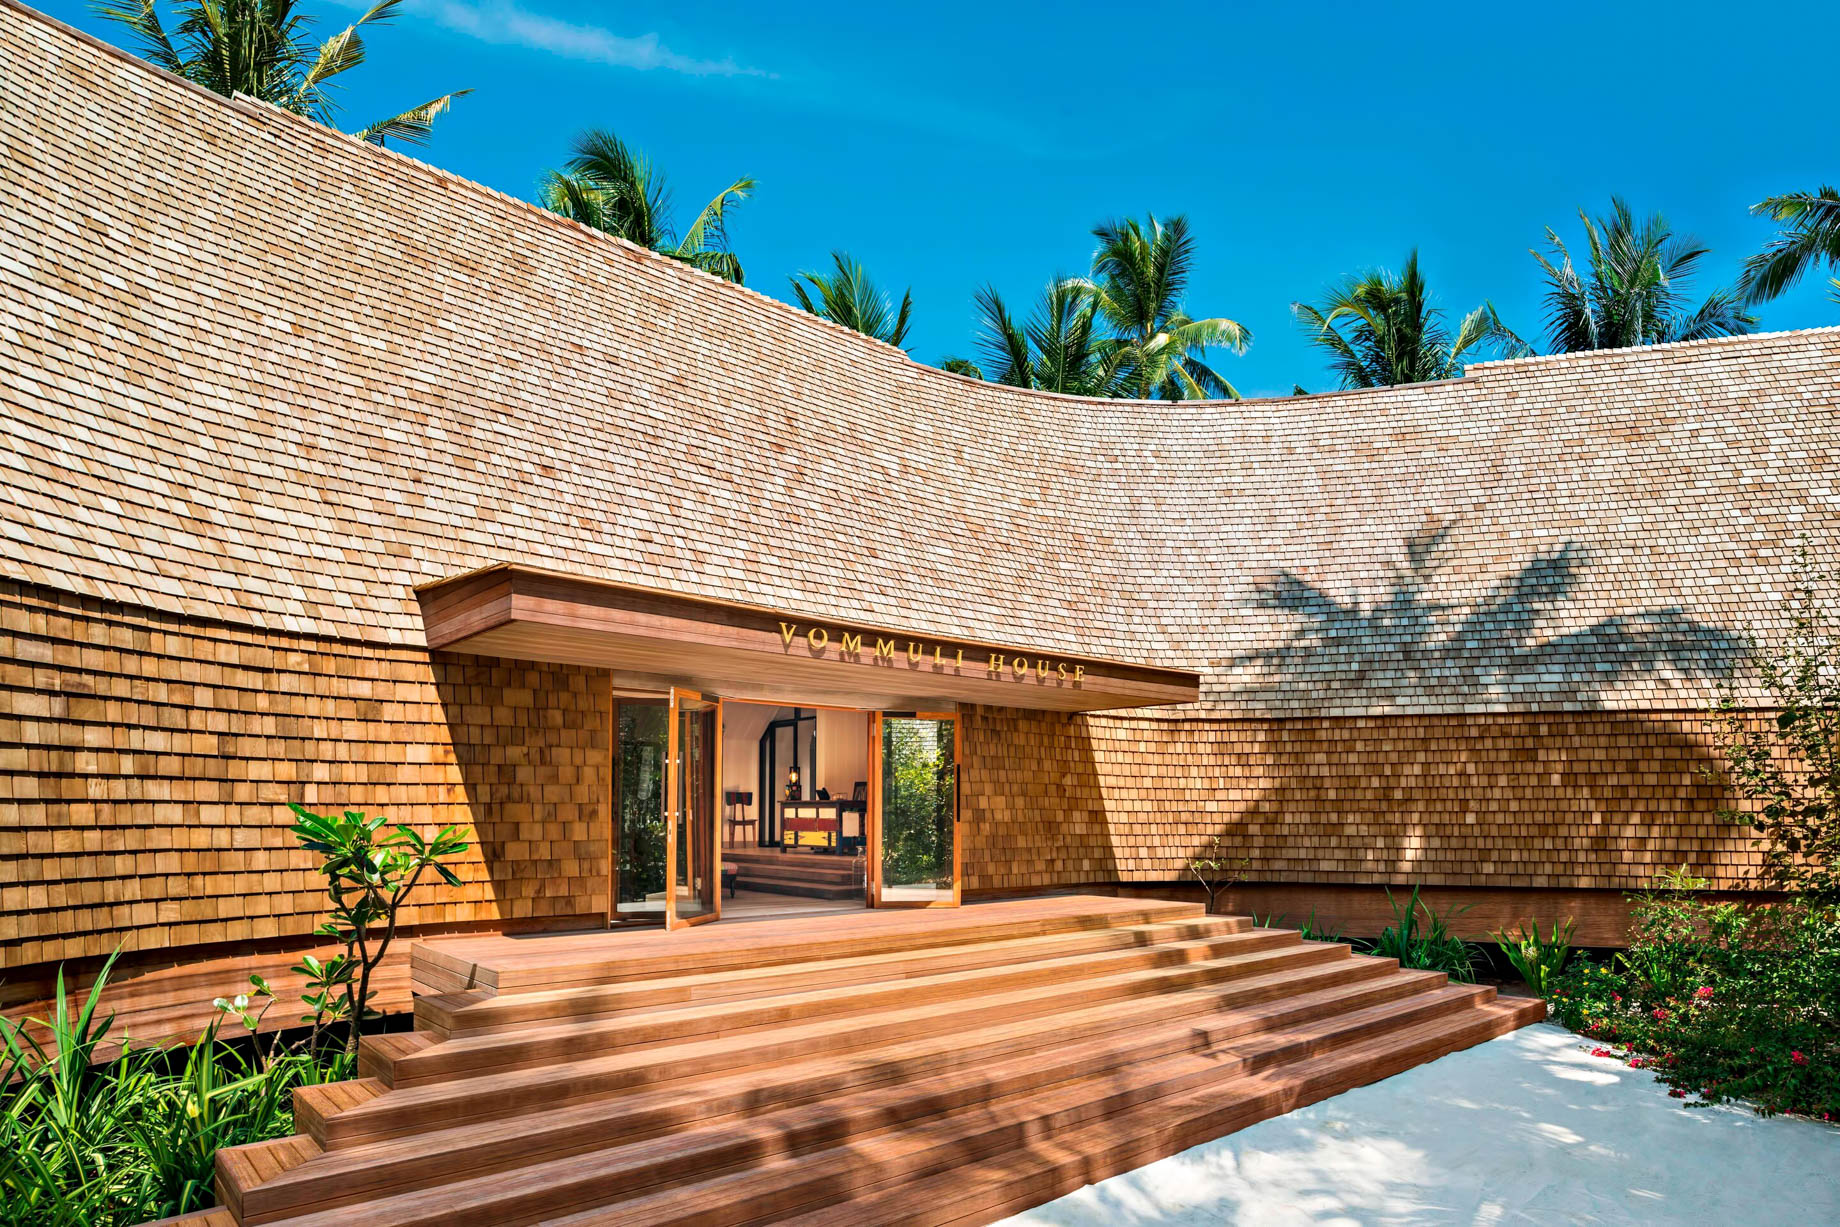 The St. Regis Maldives Vommuli Resort – Dhaalu Atoll, Maldives – Vommuli House Entrance